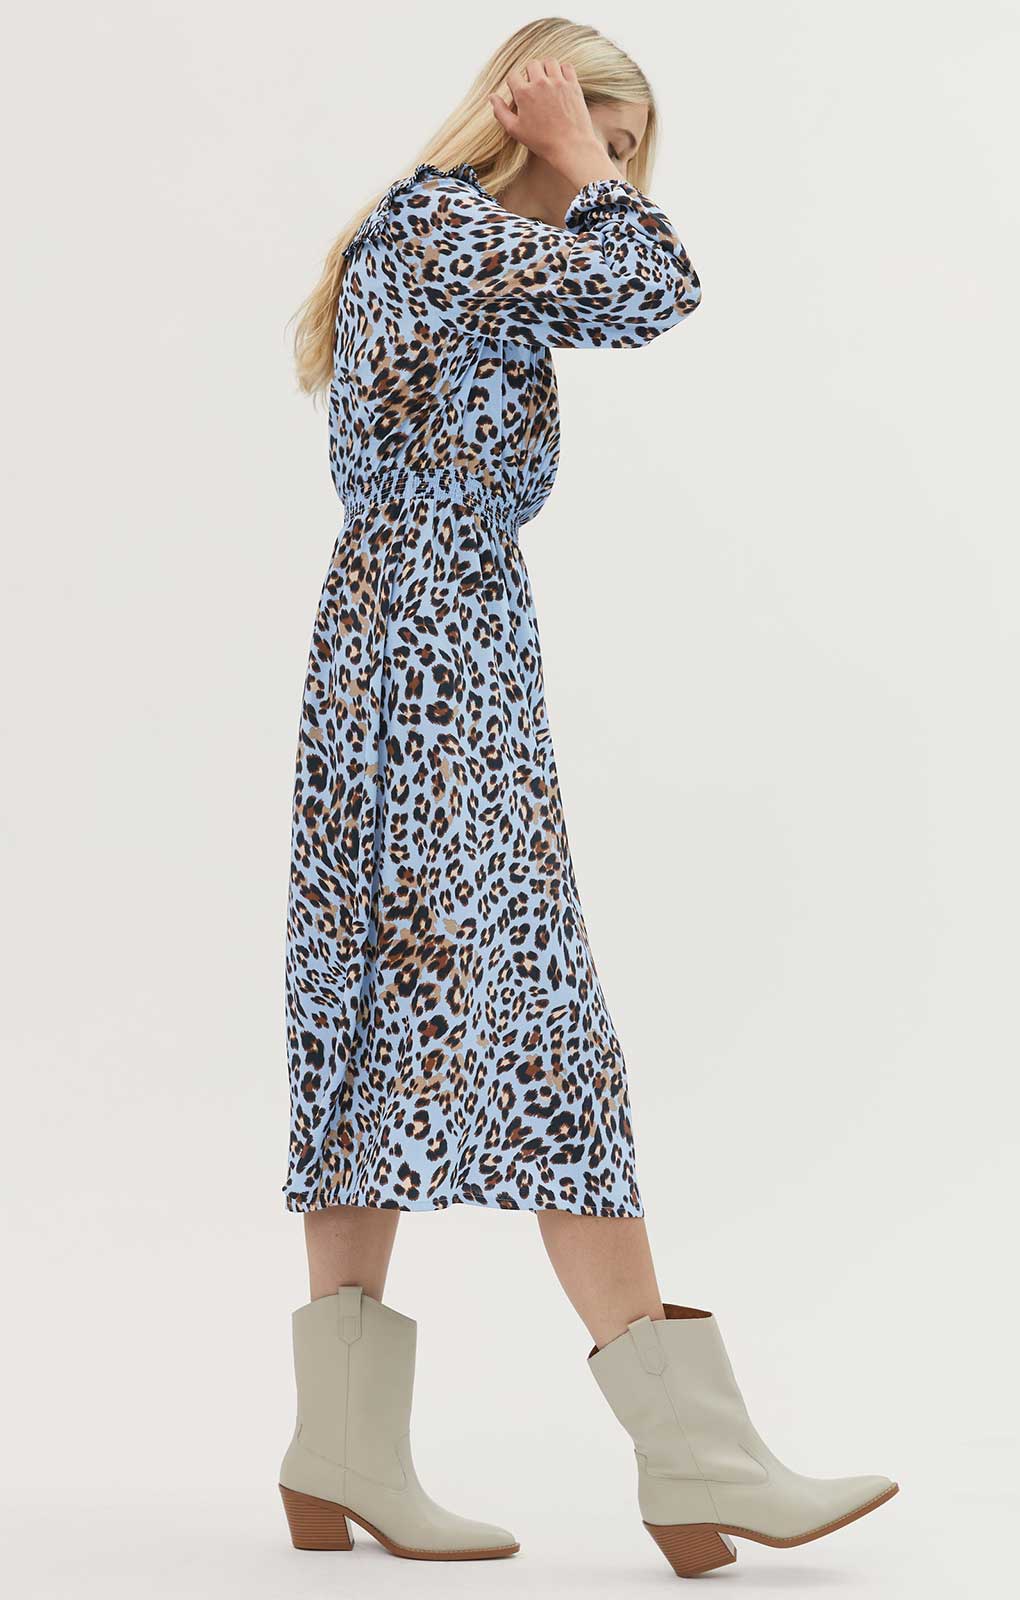 M&S Animal Print V-Neck Midi Waisted Dress product image